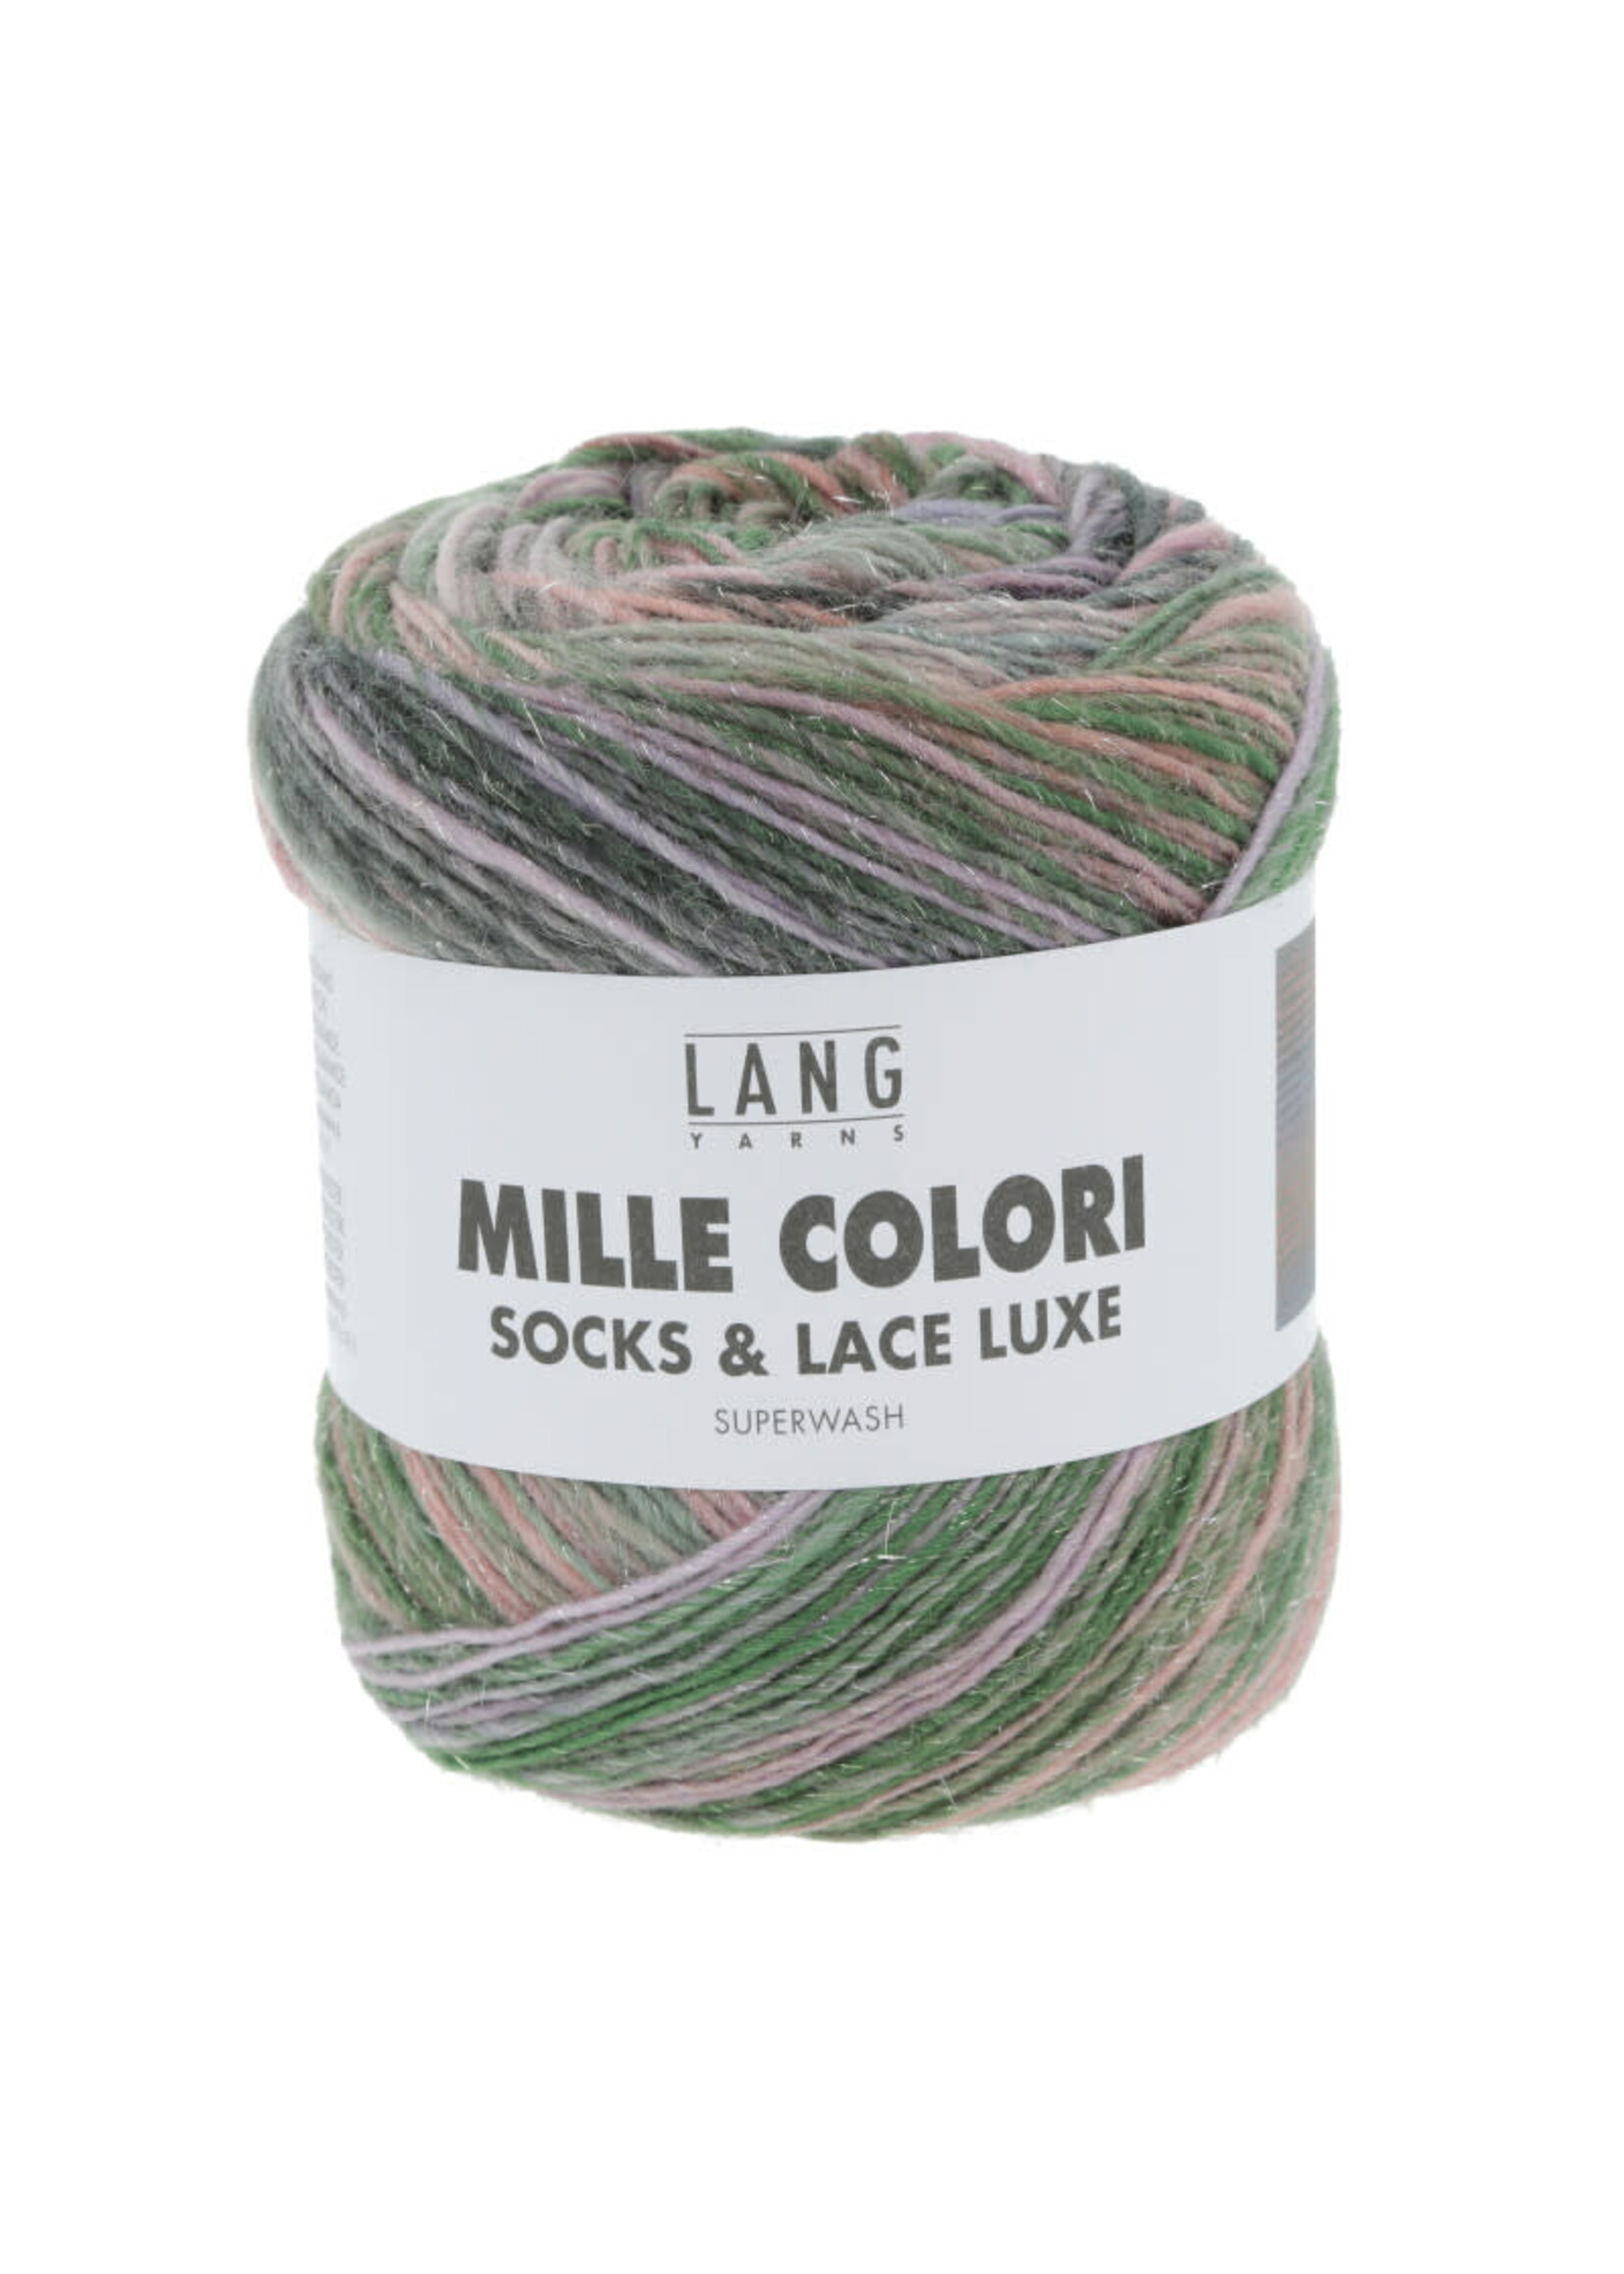 LangYarns Mille Colori Socks & Lace Luxe - 0203 lila/groen/zalm